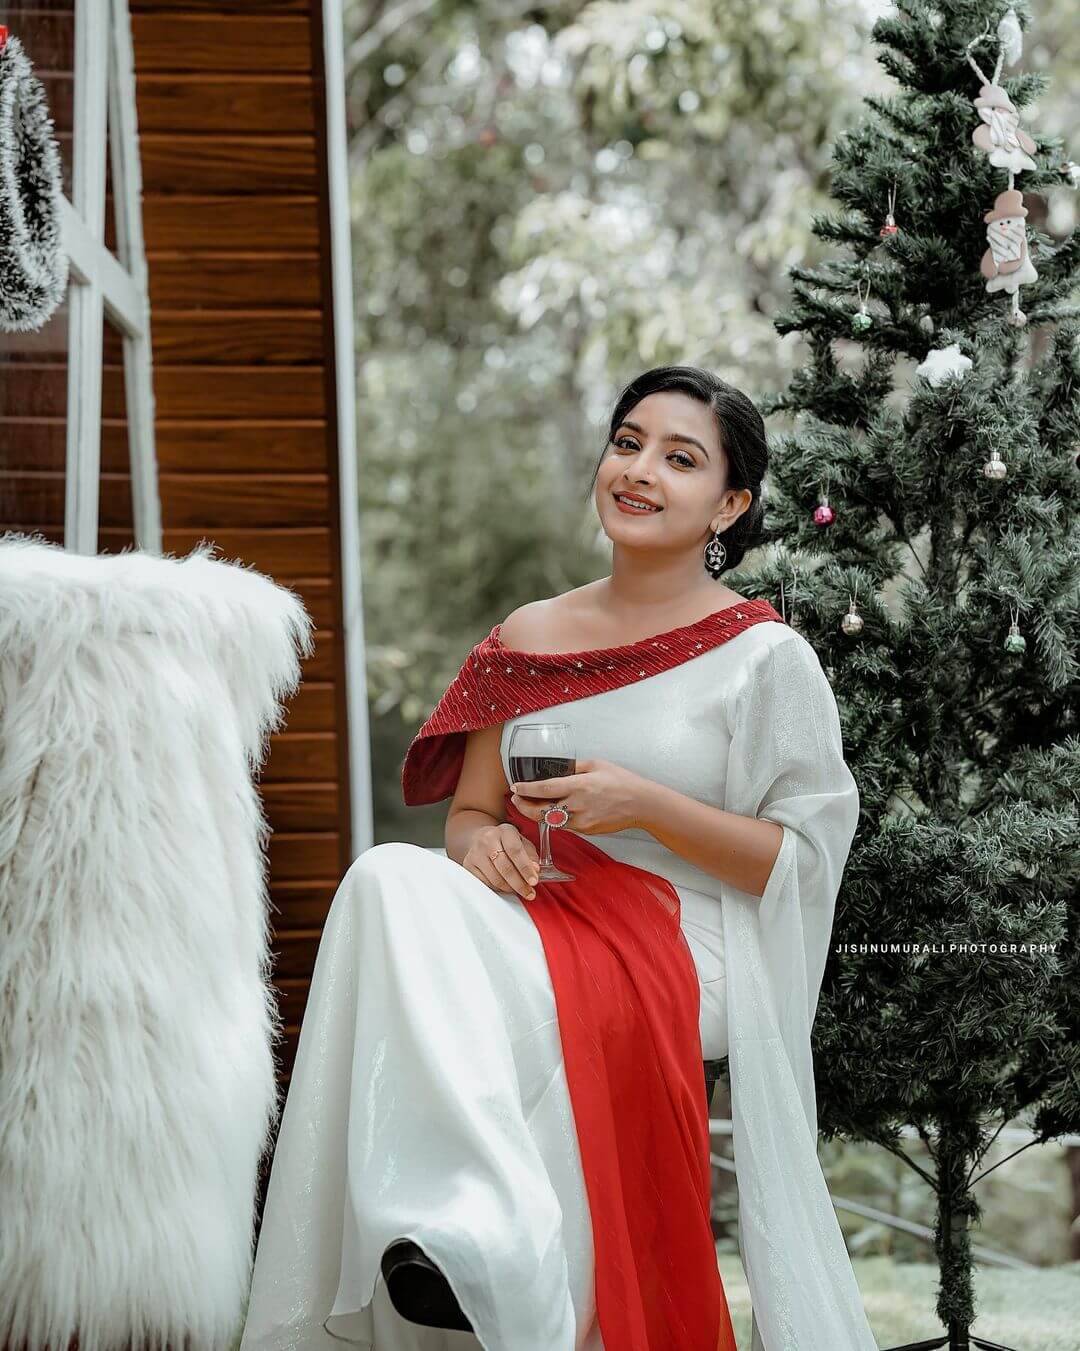 Alphy Panjikaran Flattering Look In White & Red Off Shoulder Dress Gives Us Christmas Vibes